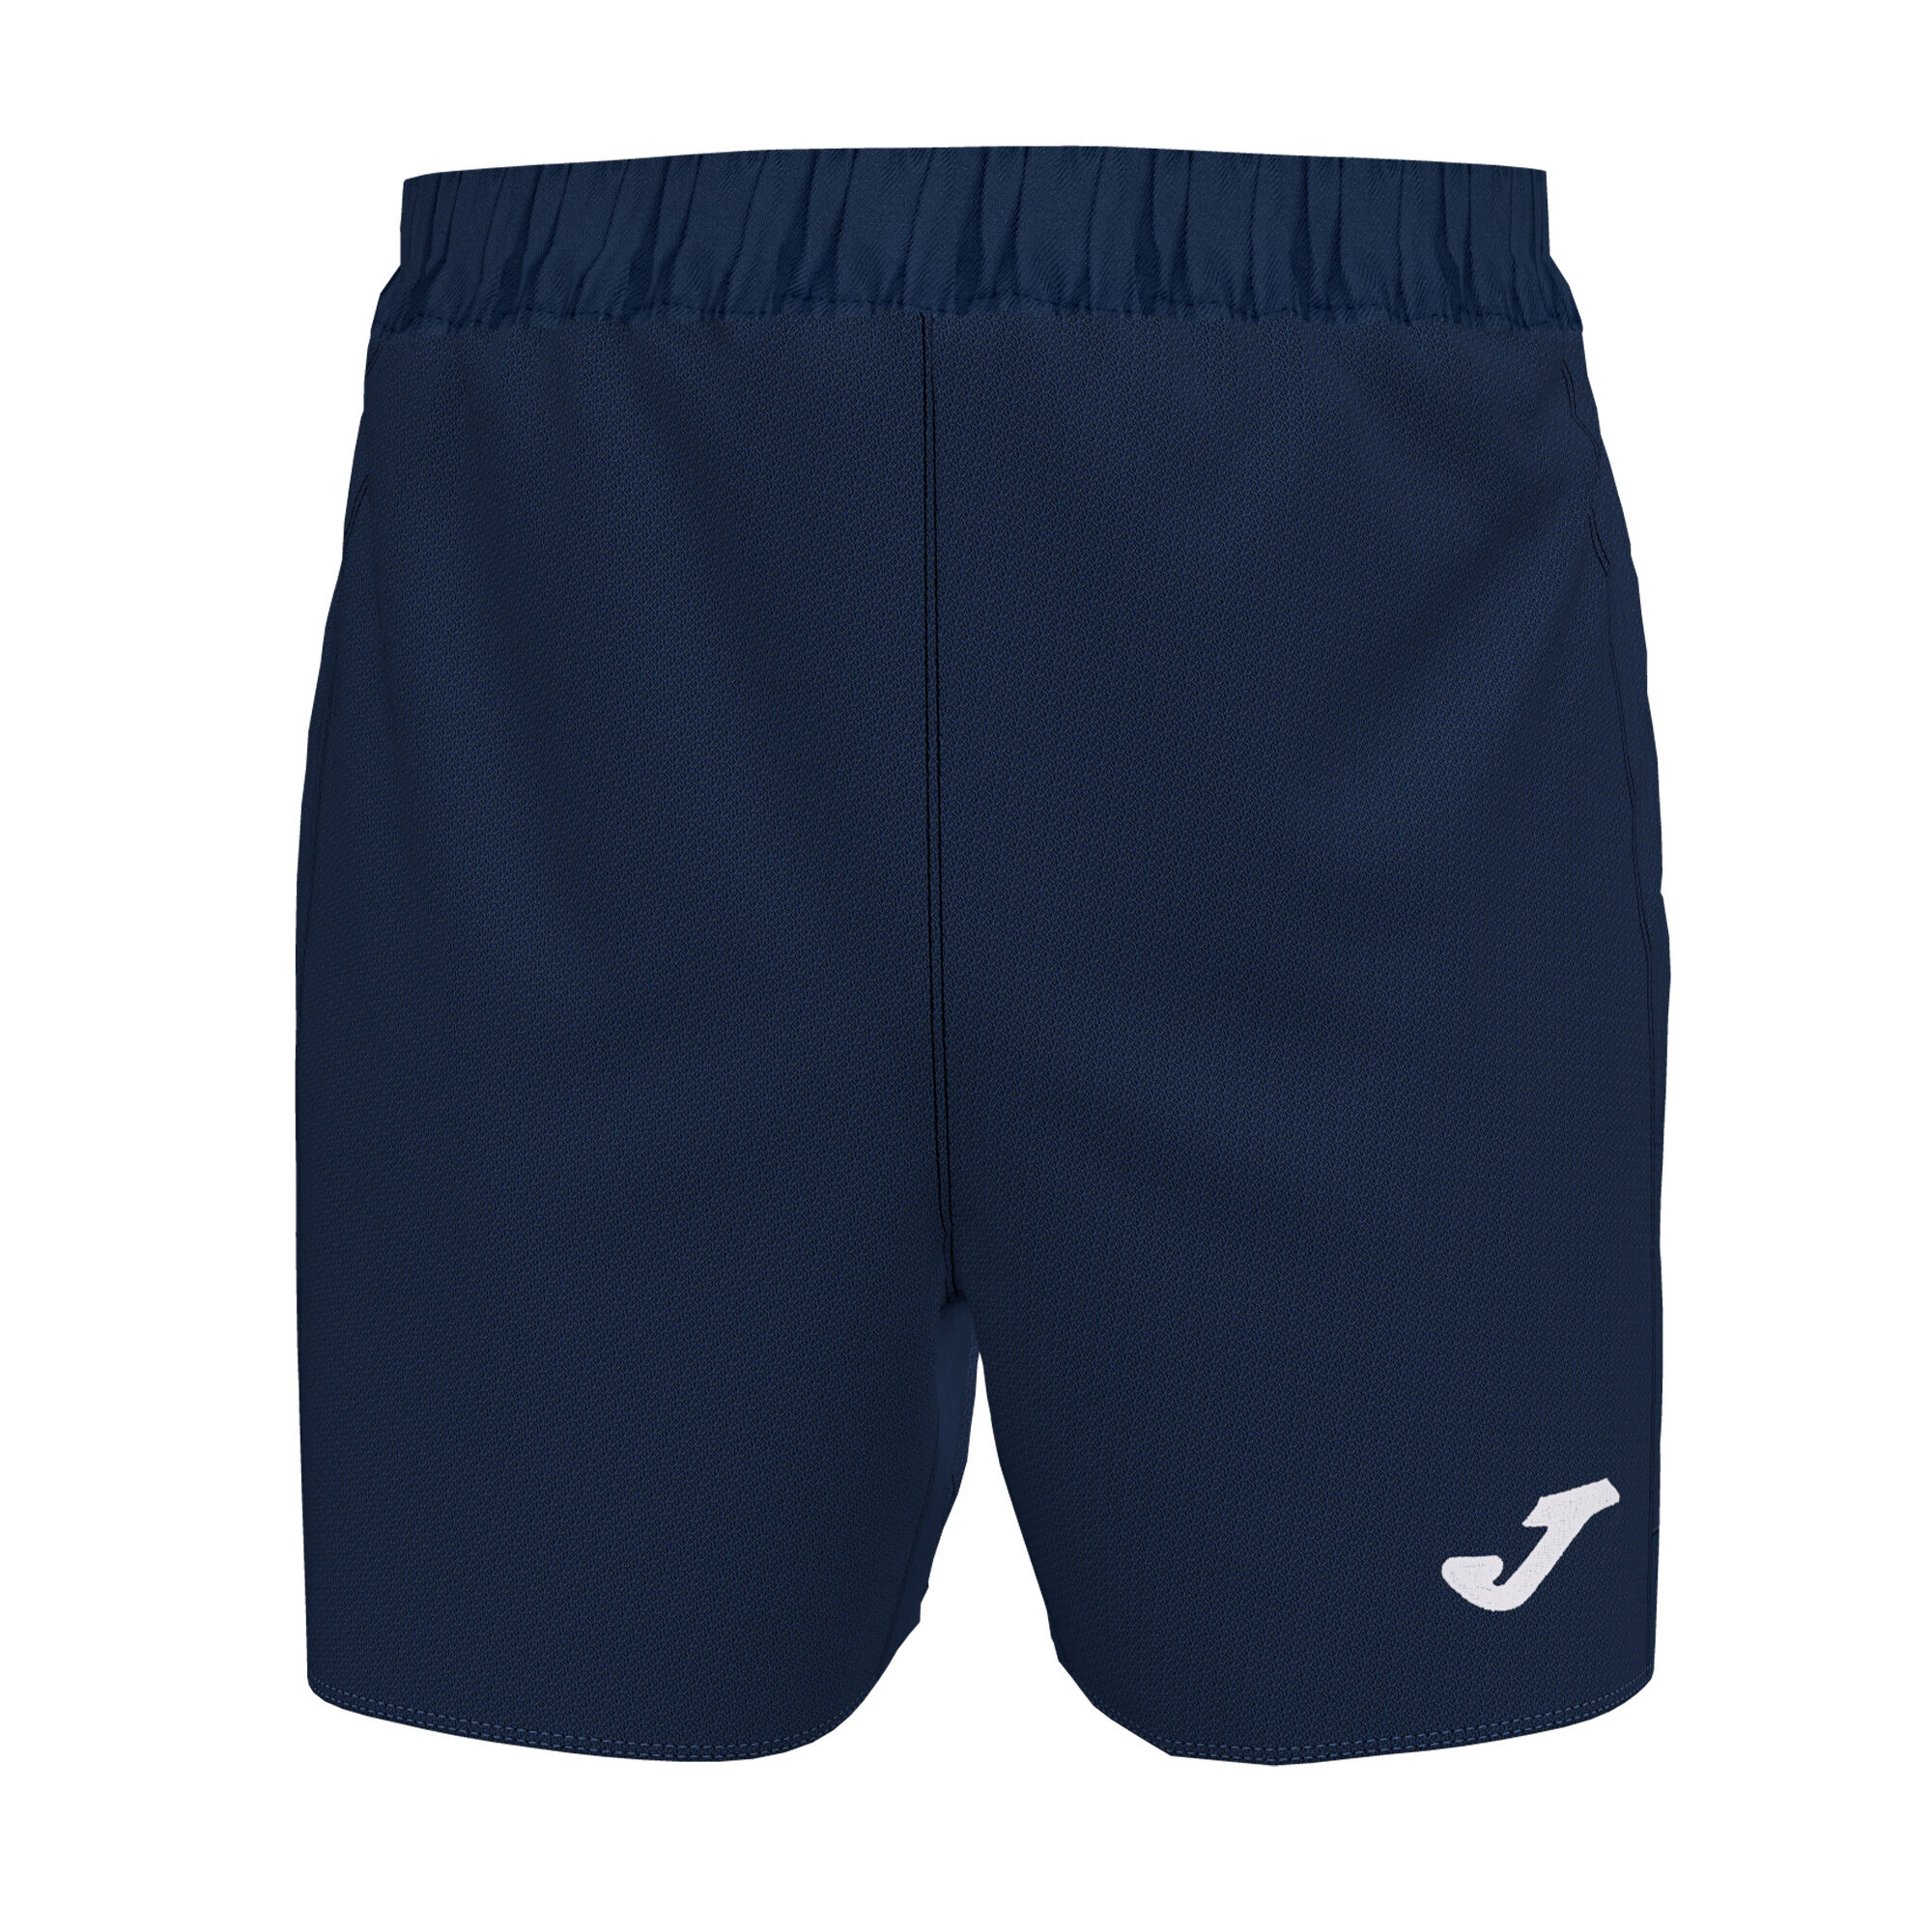 Shorts man Myskin II navy blue